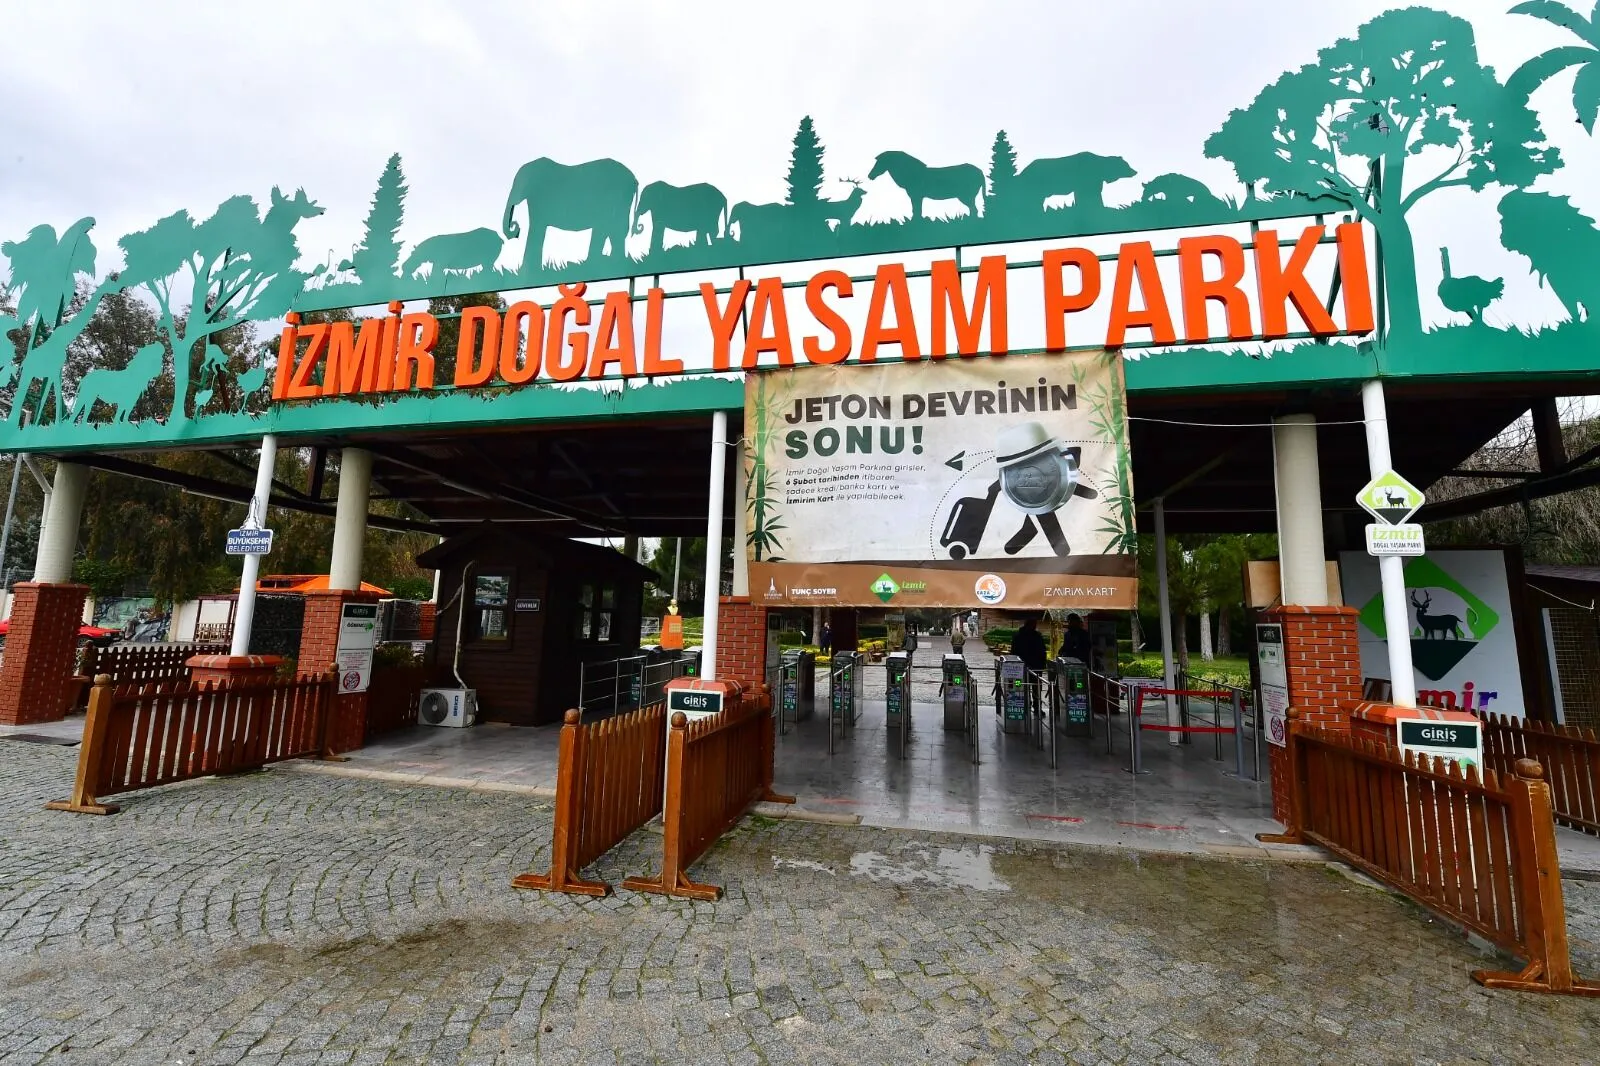 Izmir Dogal Yasam Parki Yeni Bakis